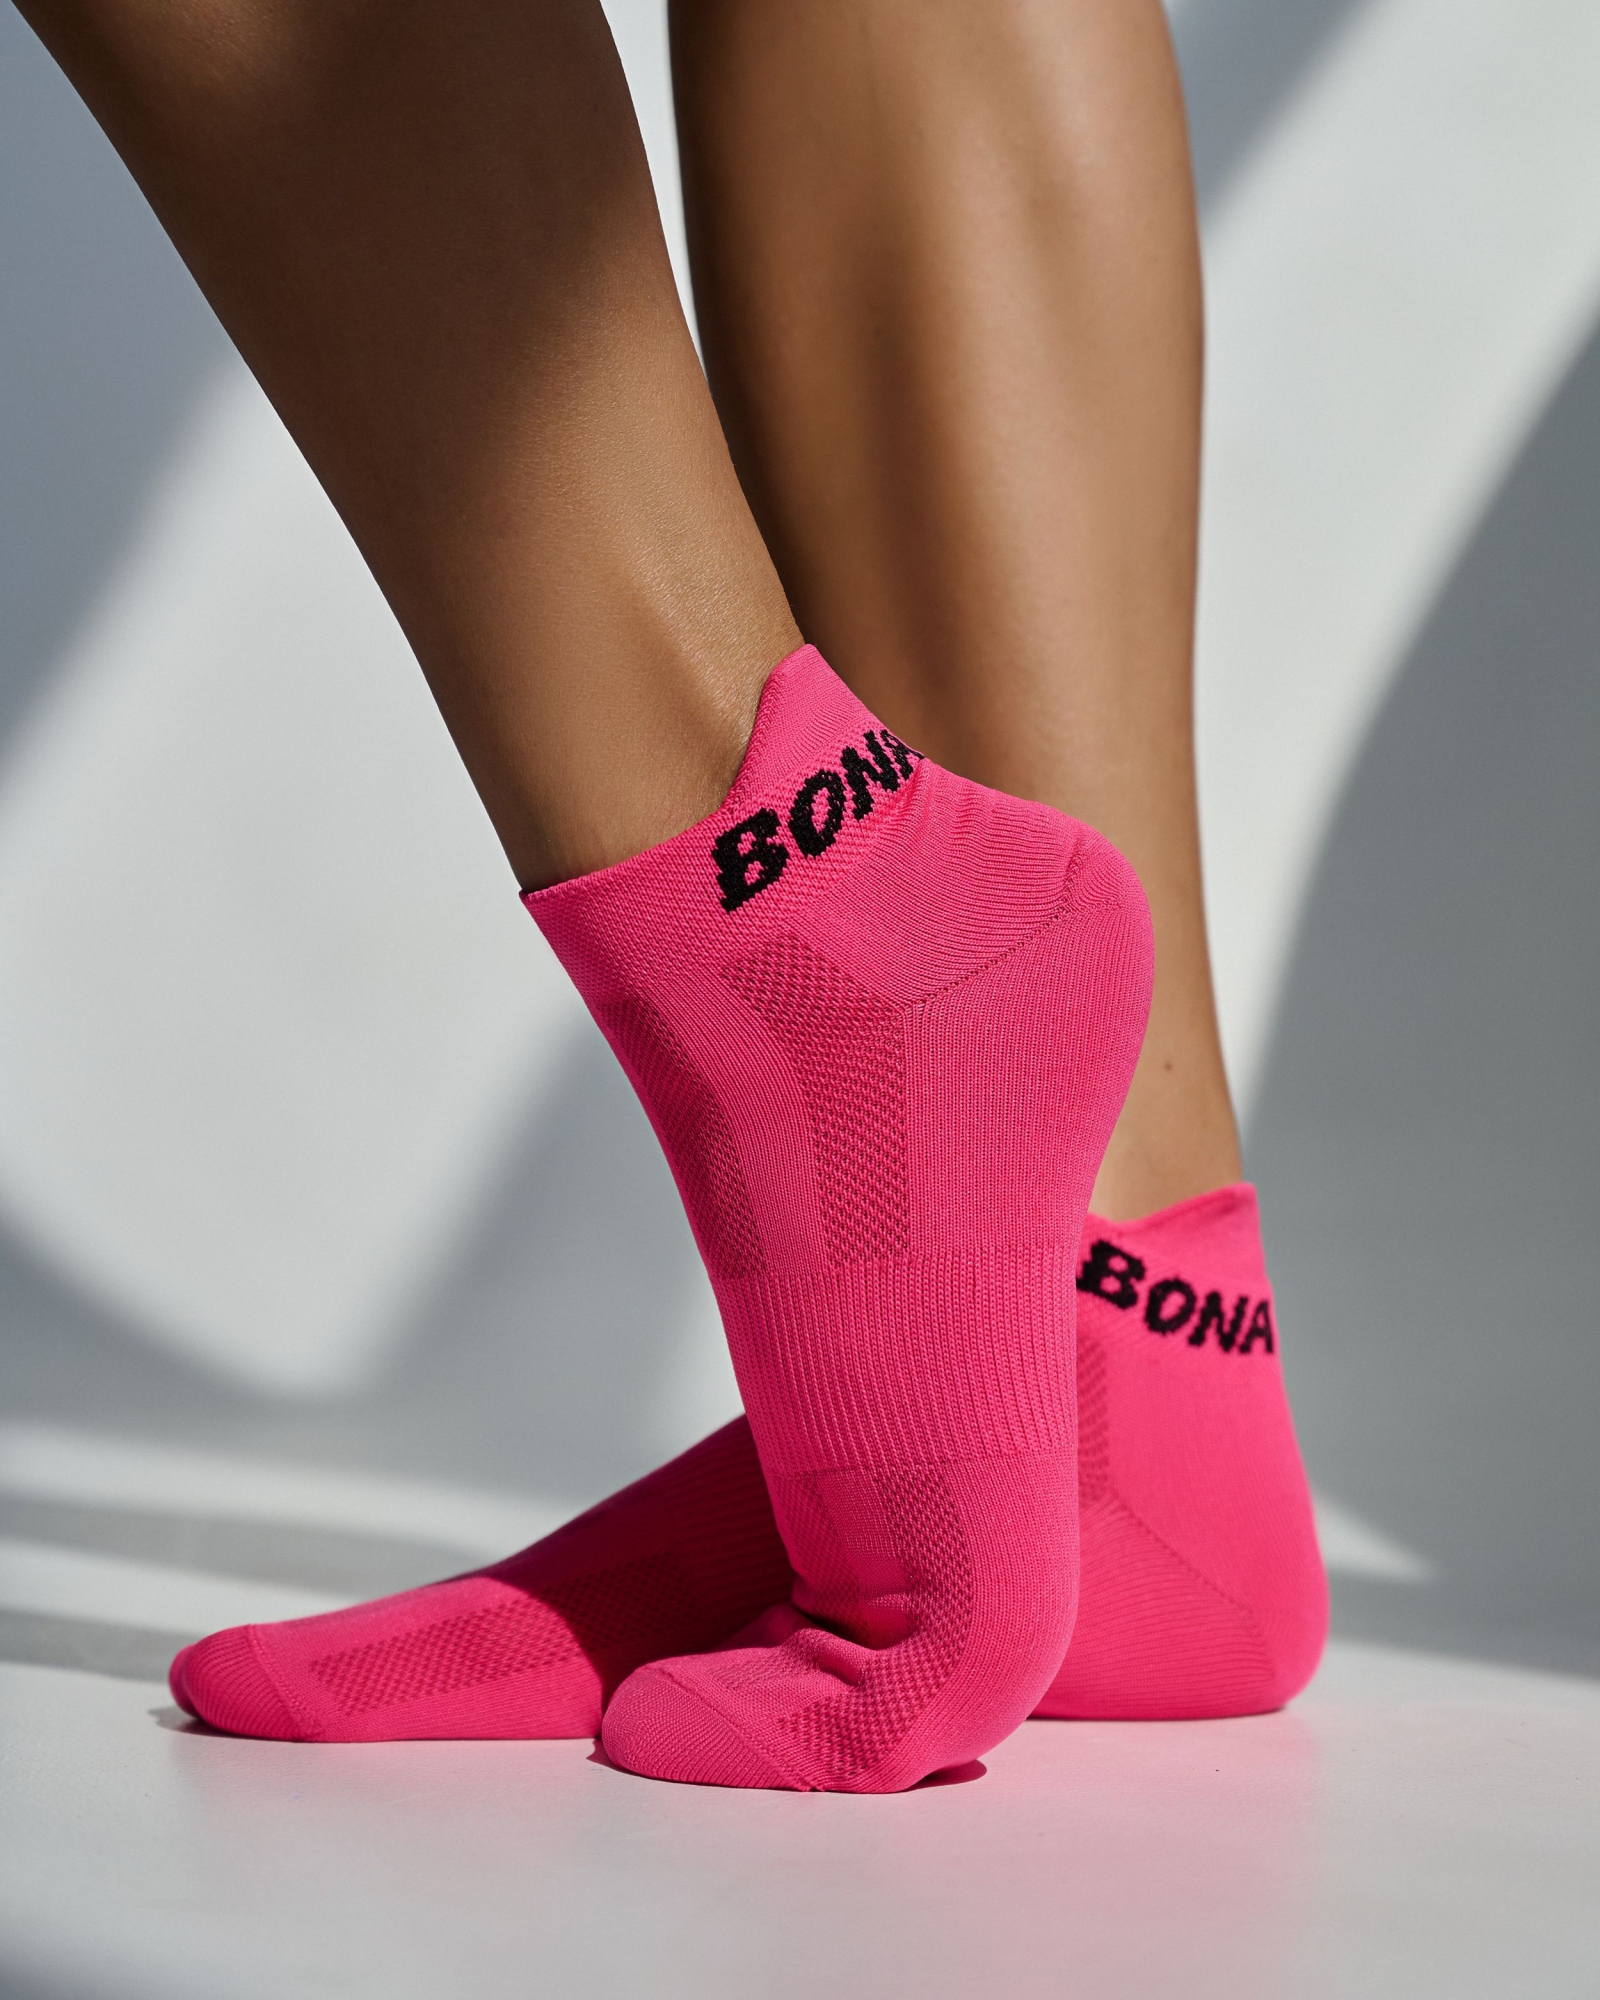 Bona Fide: Color Set of Socks(3 пары) фото 3